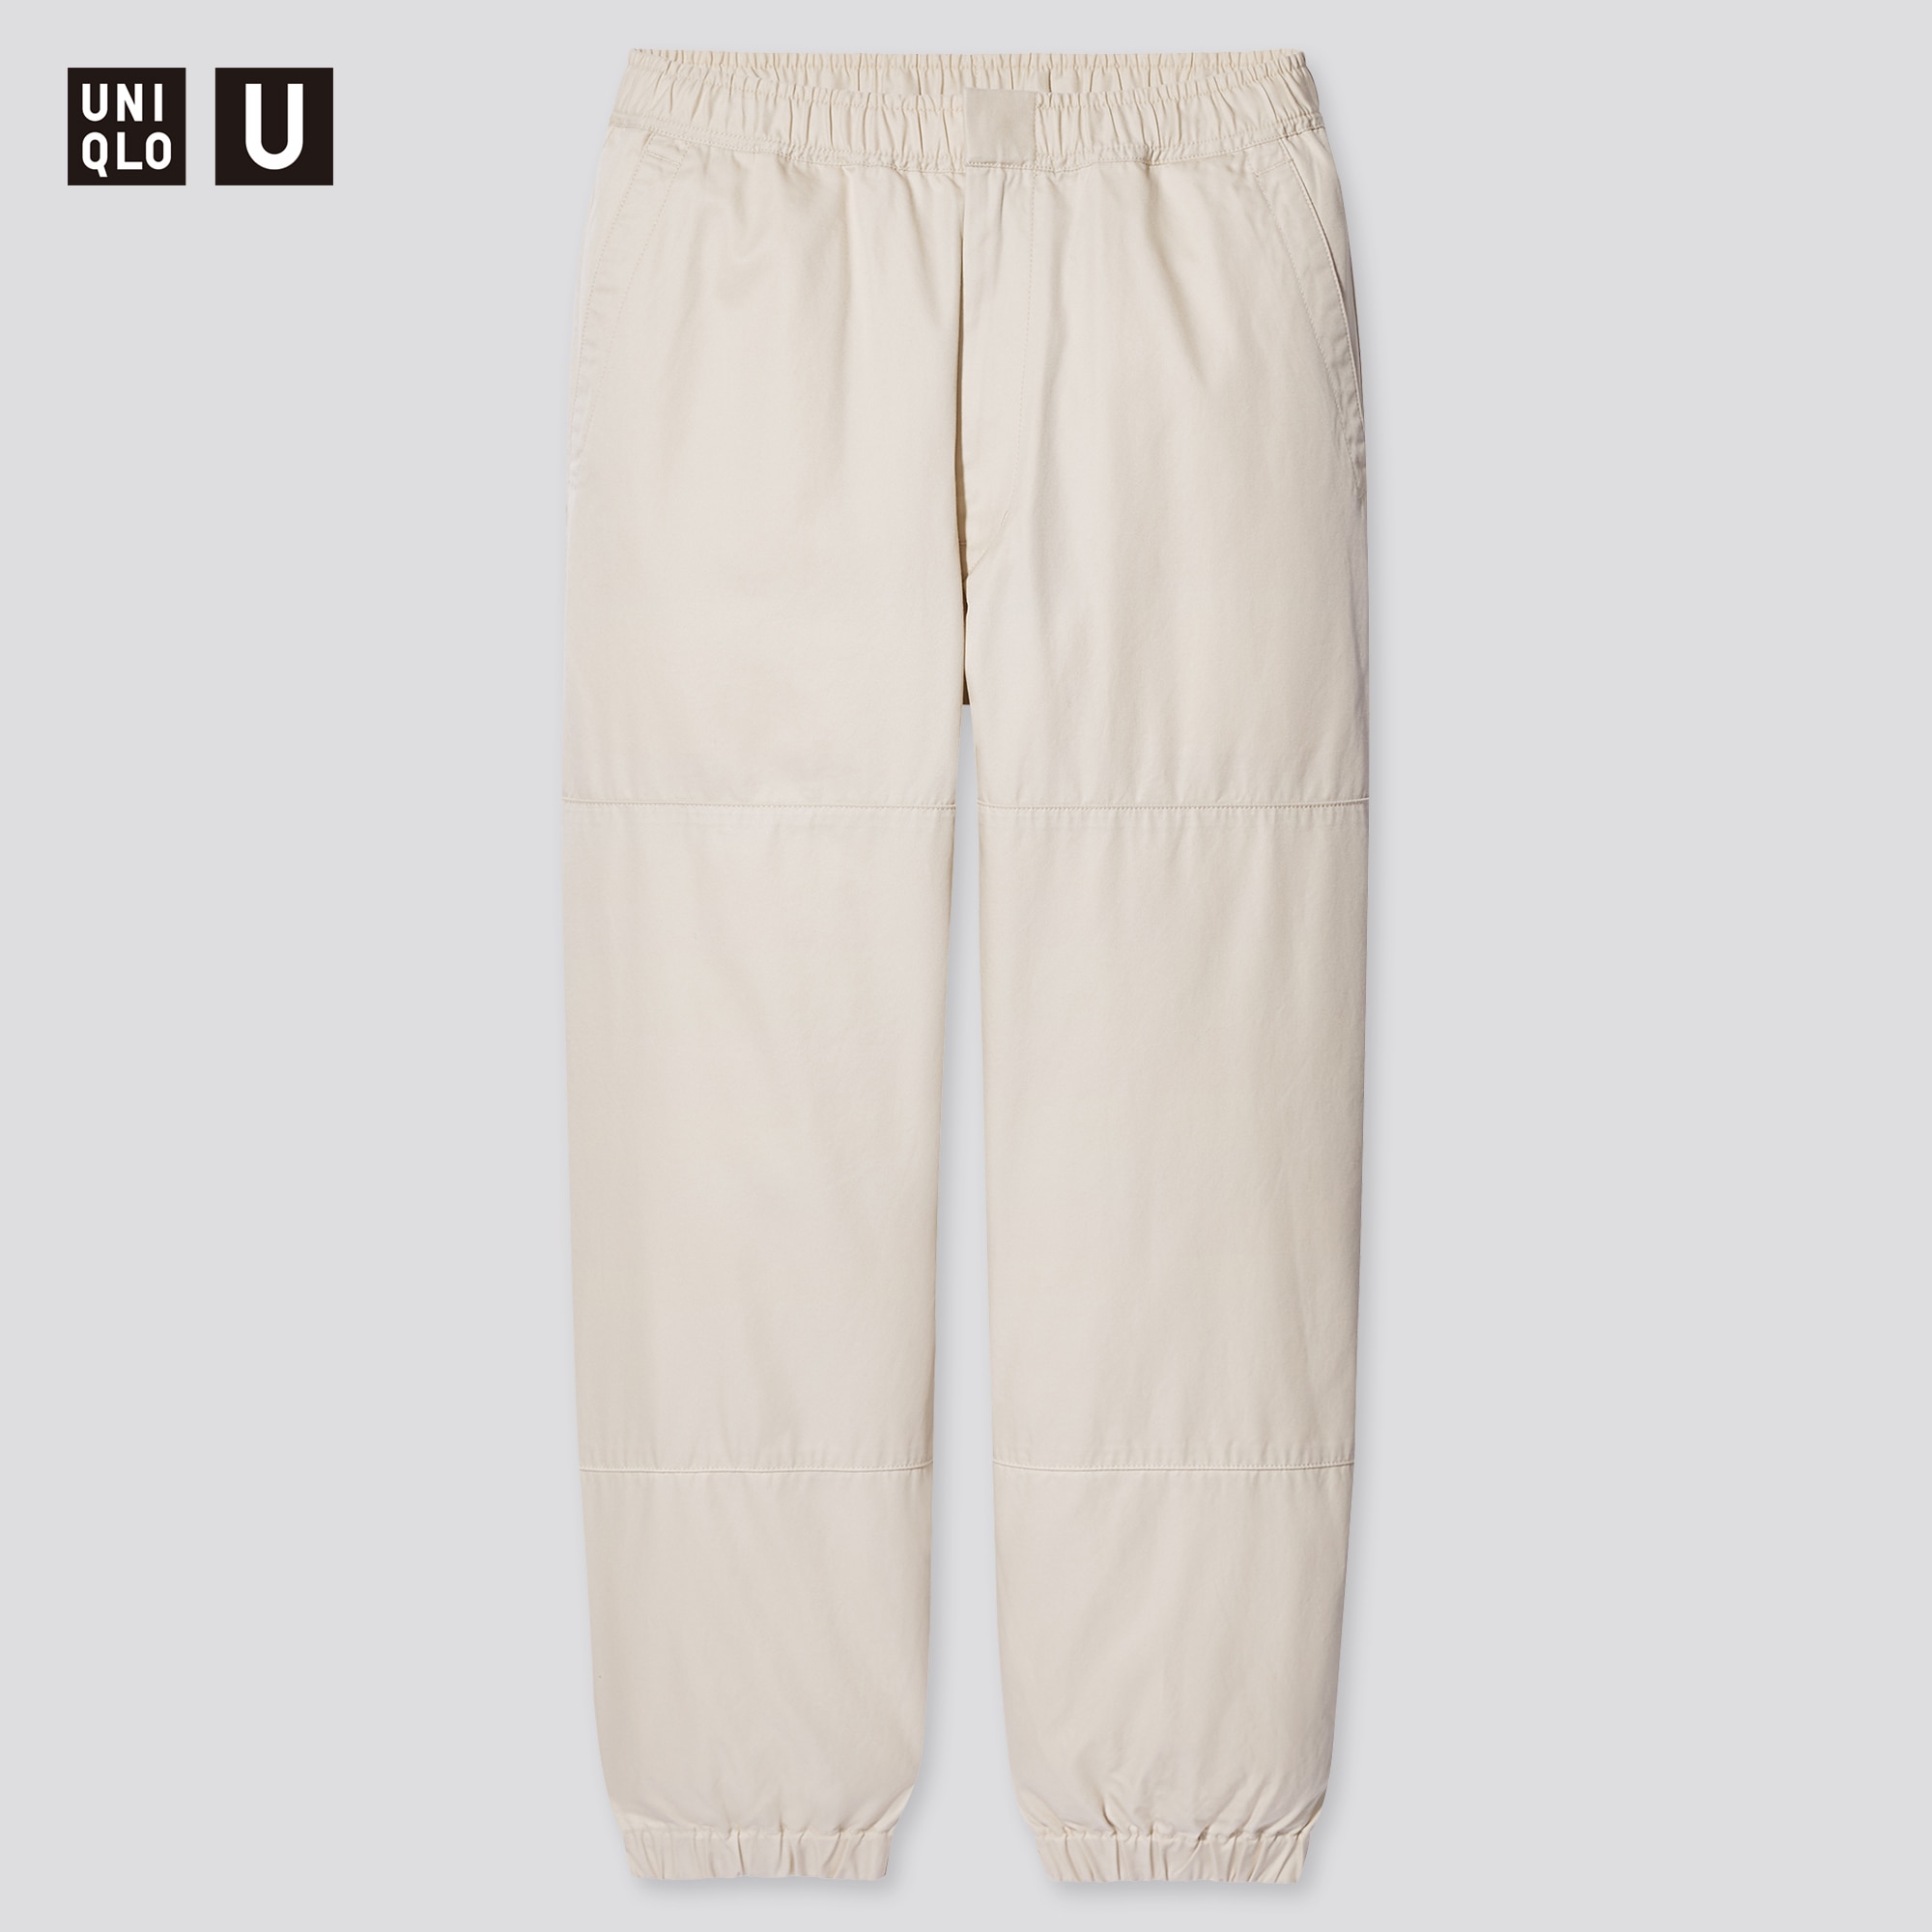 UNIQLO Soft Fluffy Jogger Pants size XXL dark brown color new 2xl